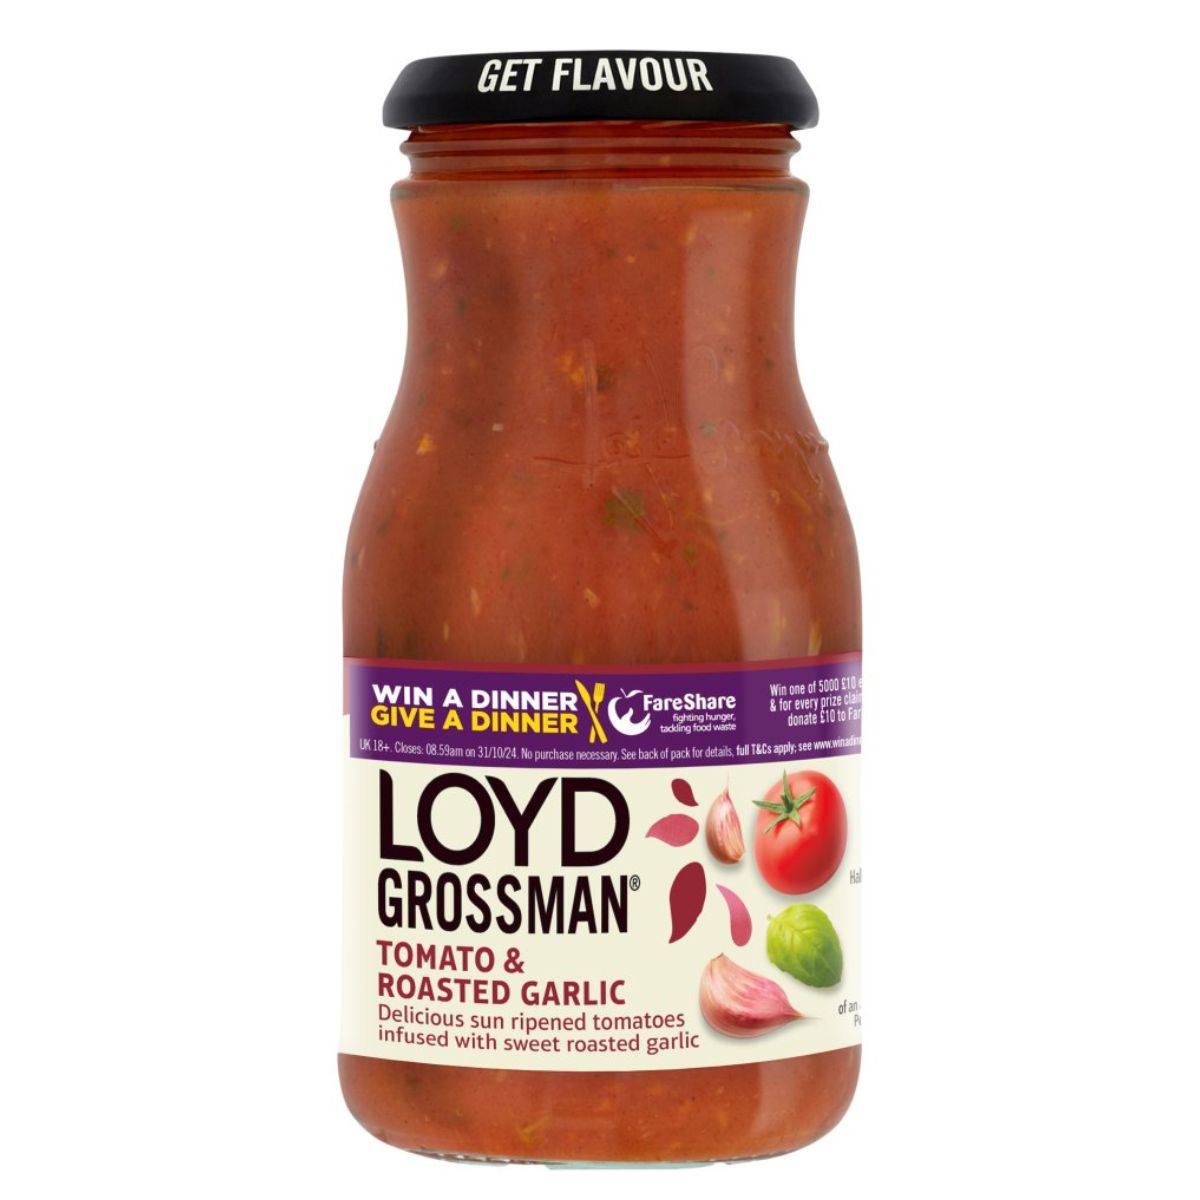 Loyd Grossman - Tomato & Roasted Garlic - 350g sauce.